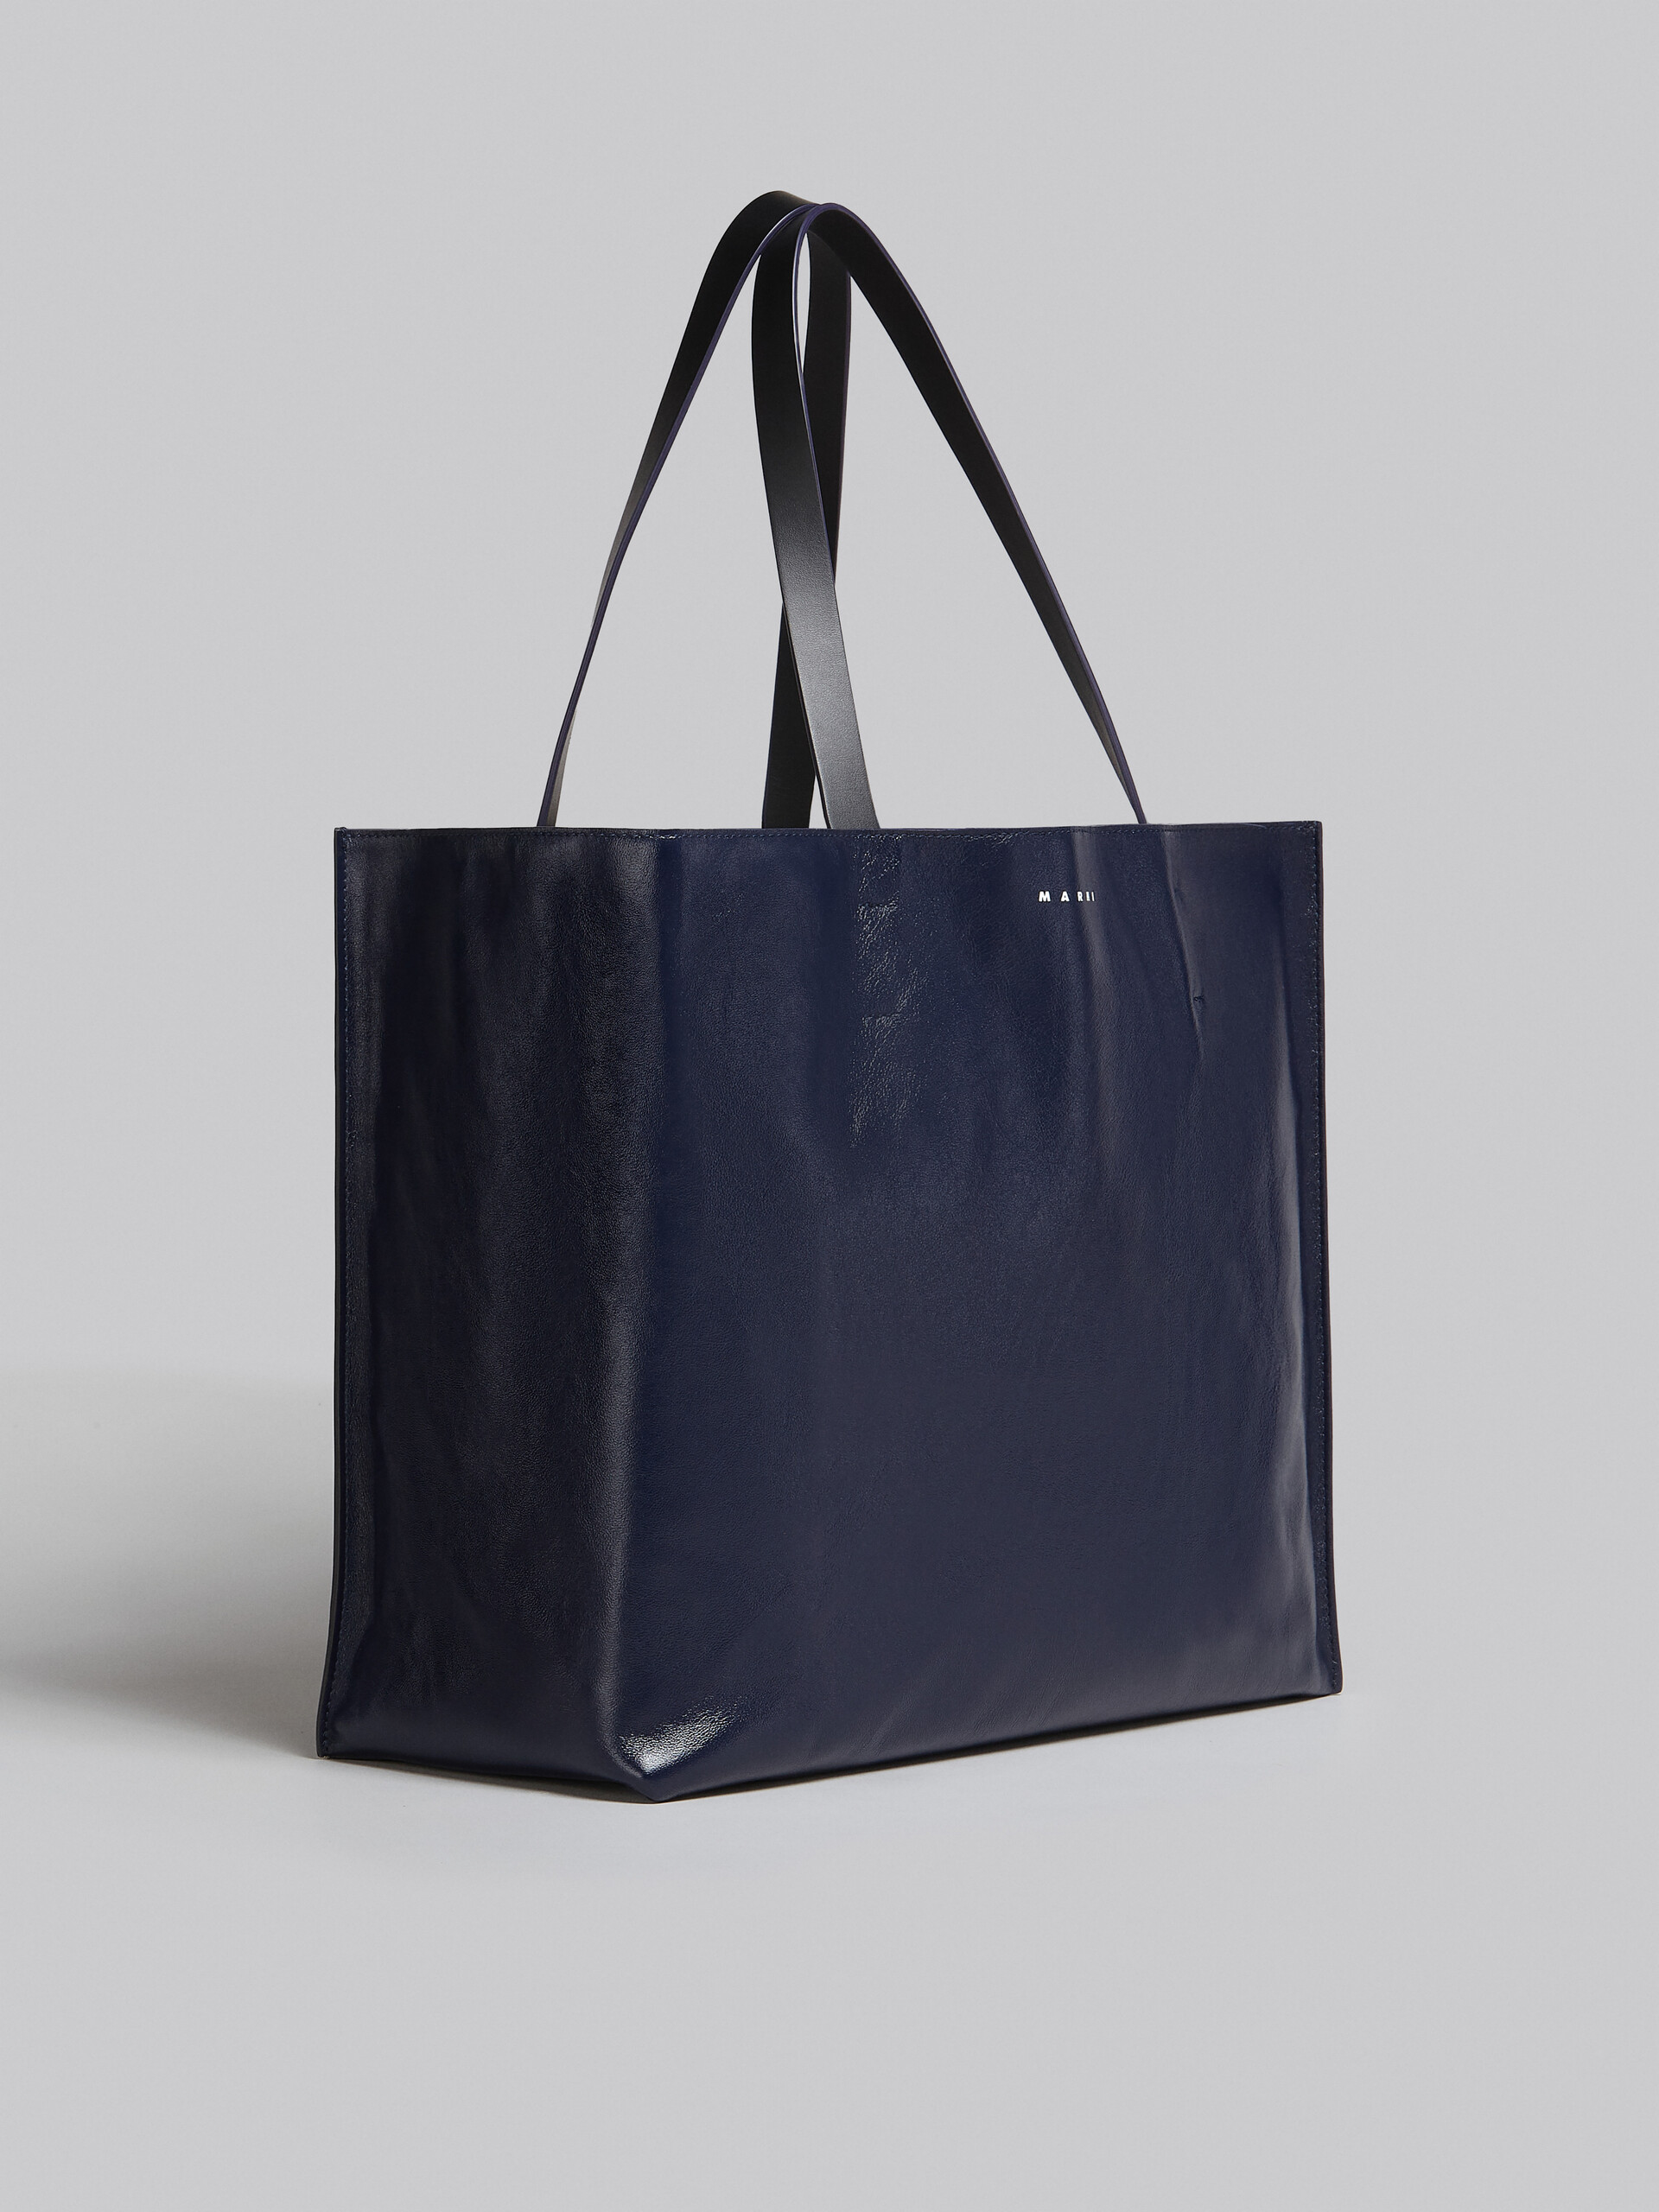 Museo Soft Bag in pelle blu e nera - Borse shopping - Image 6